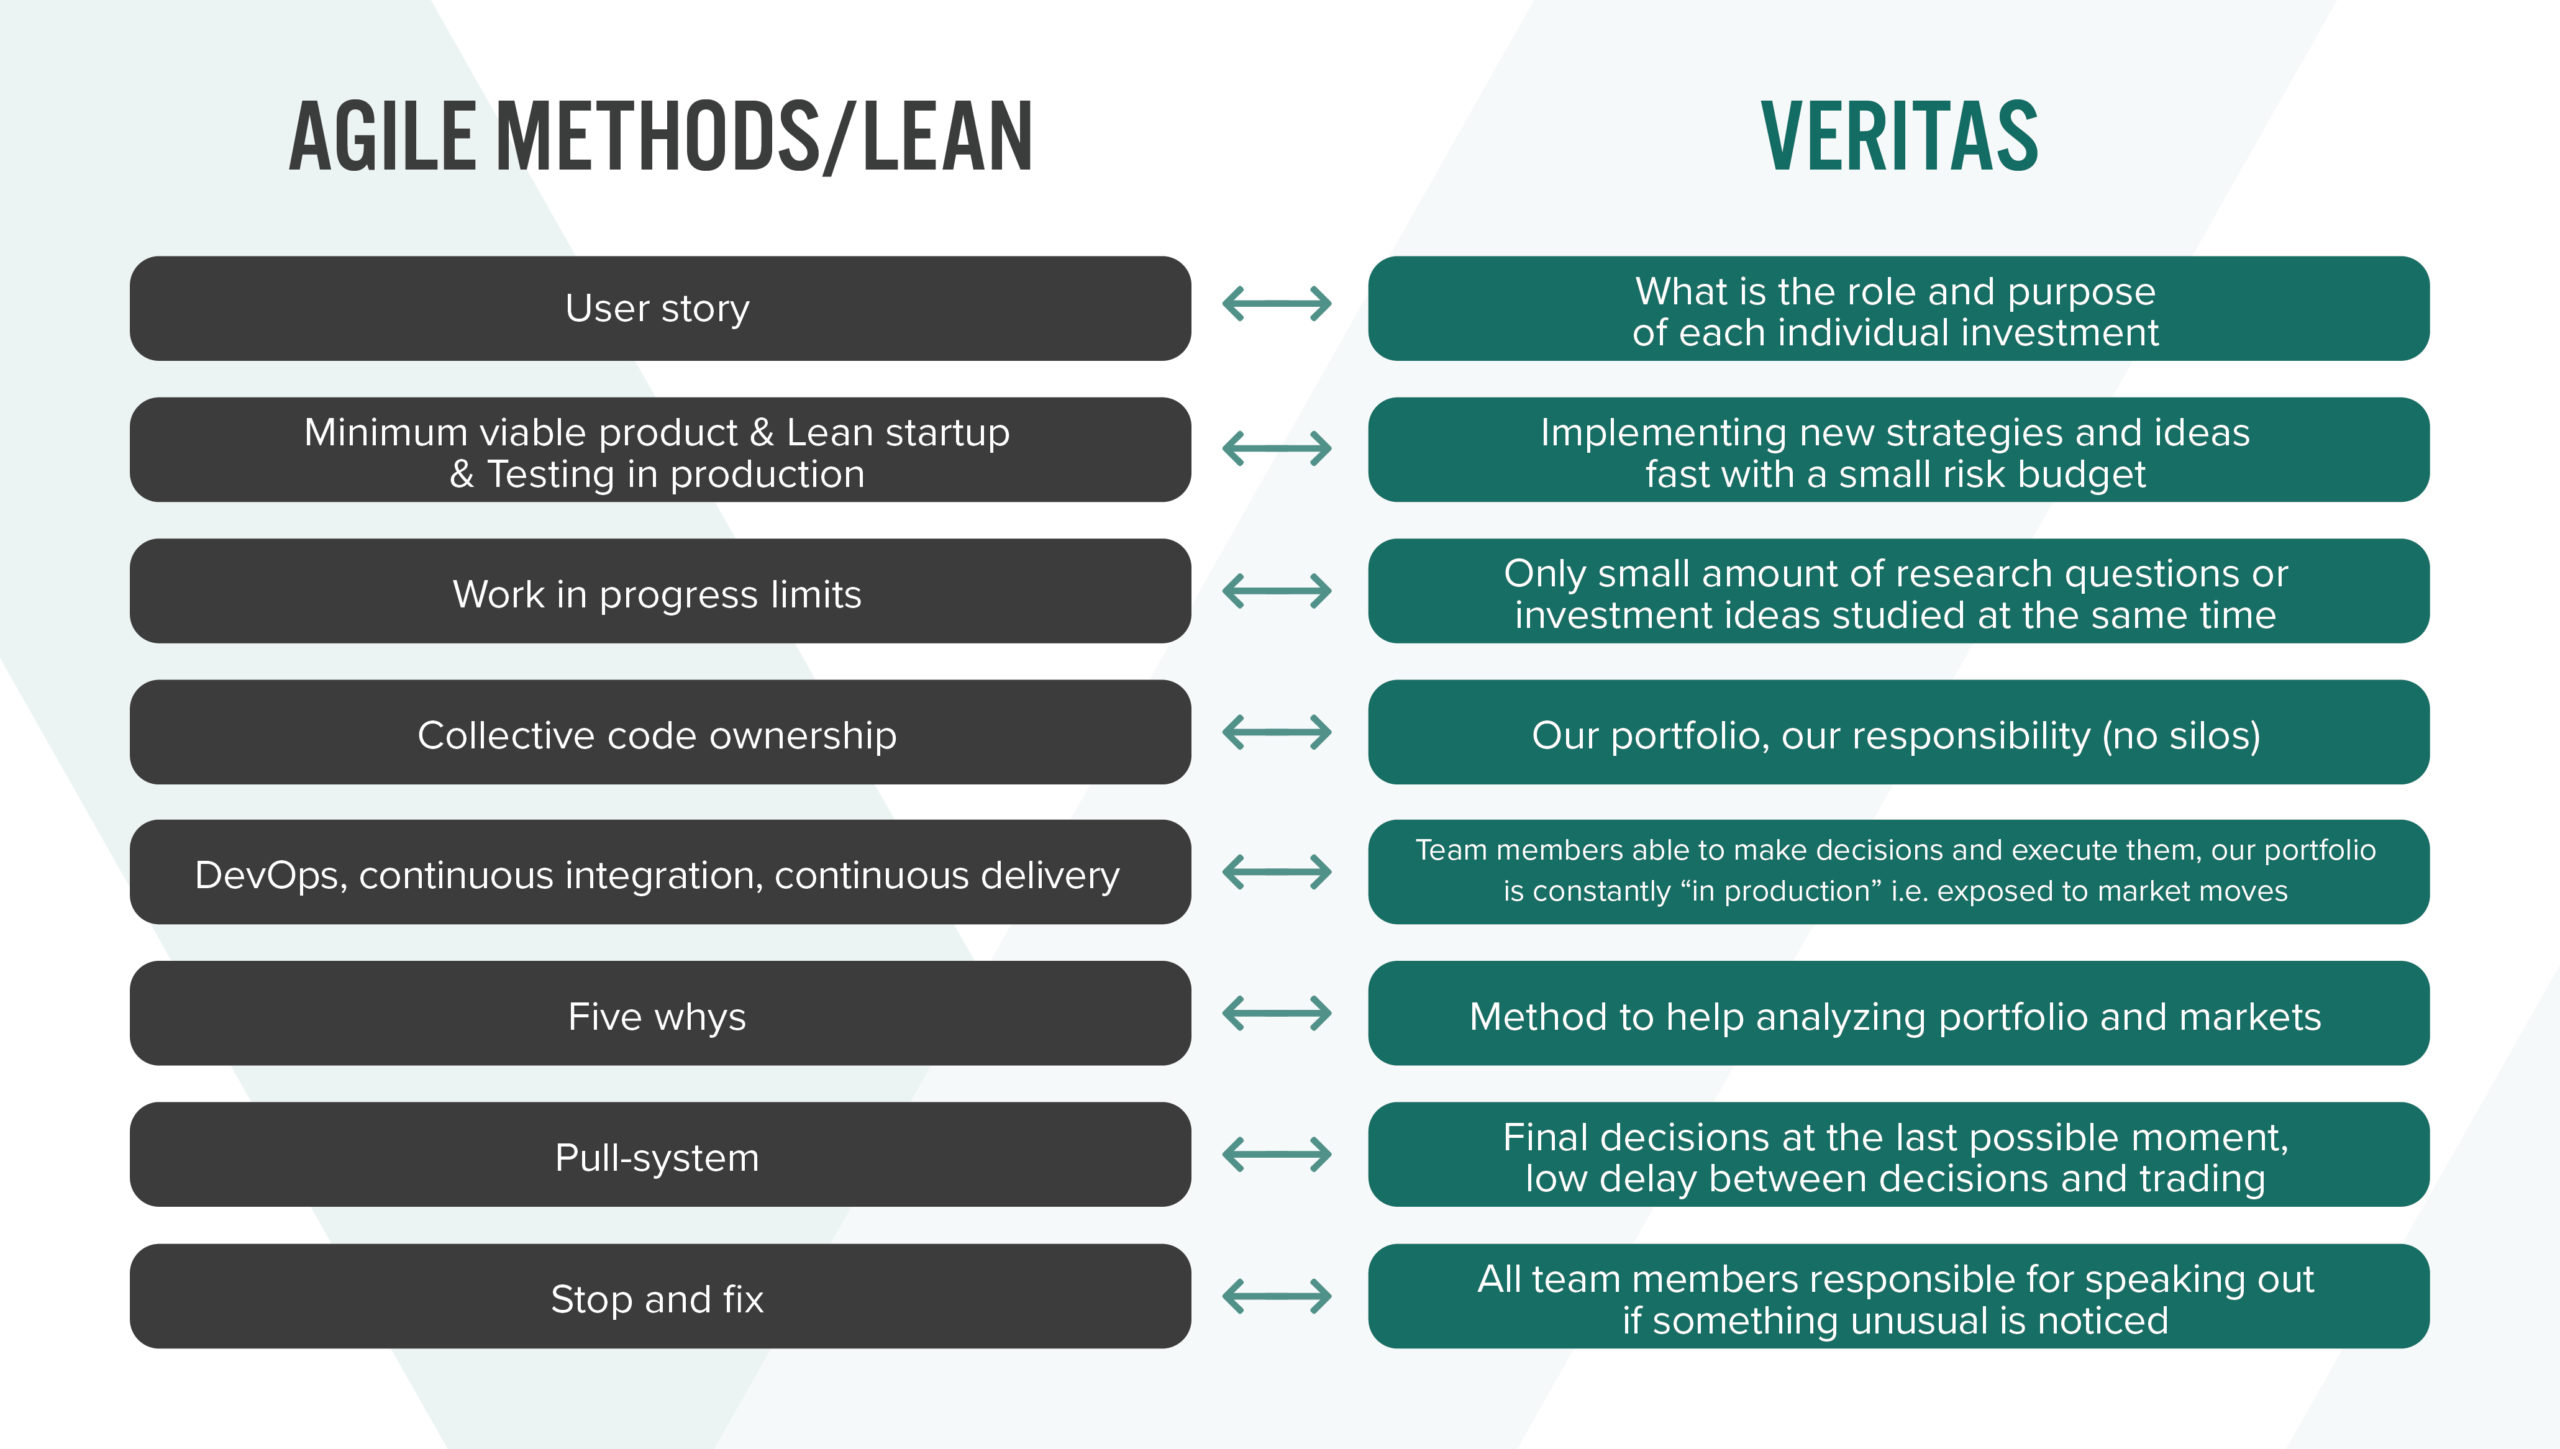 Agile methods/lean and Veritas